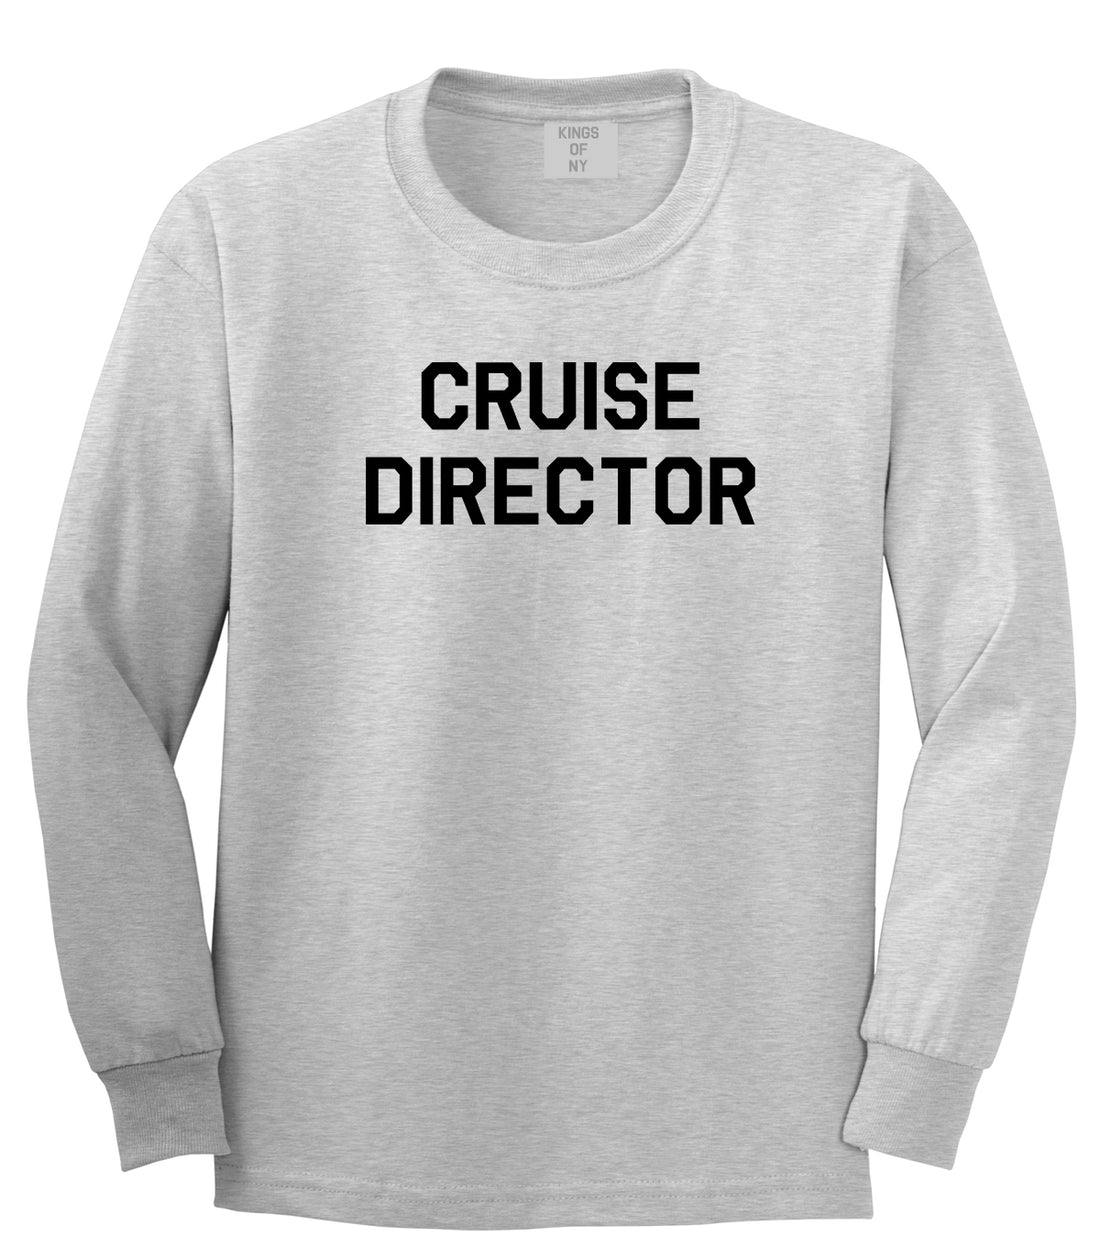 Cruise Director Mens Grey Long Sleeve T-Shirt by Kings Of NY